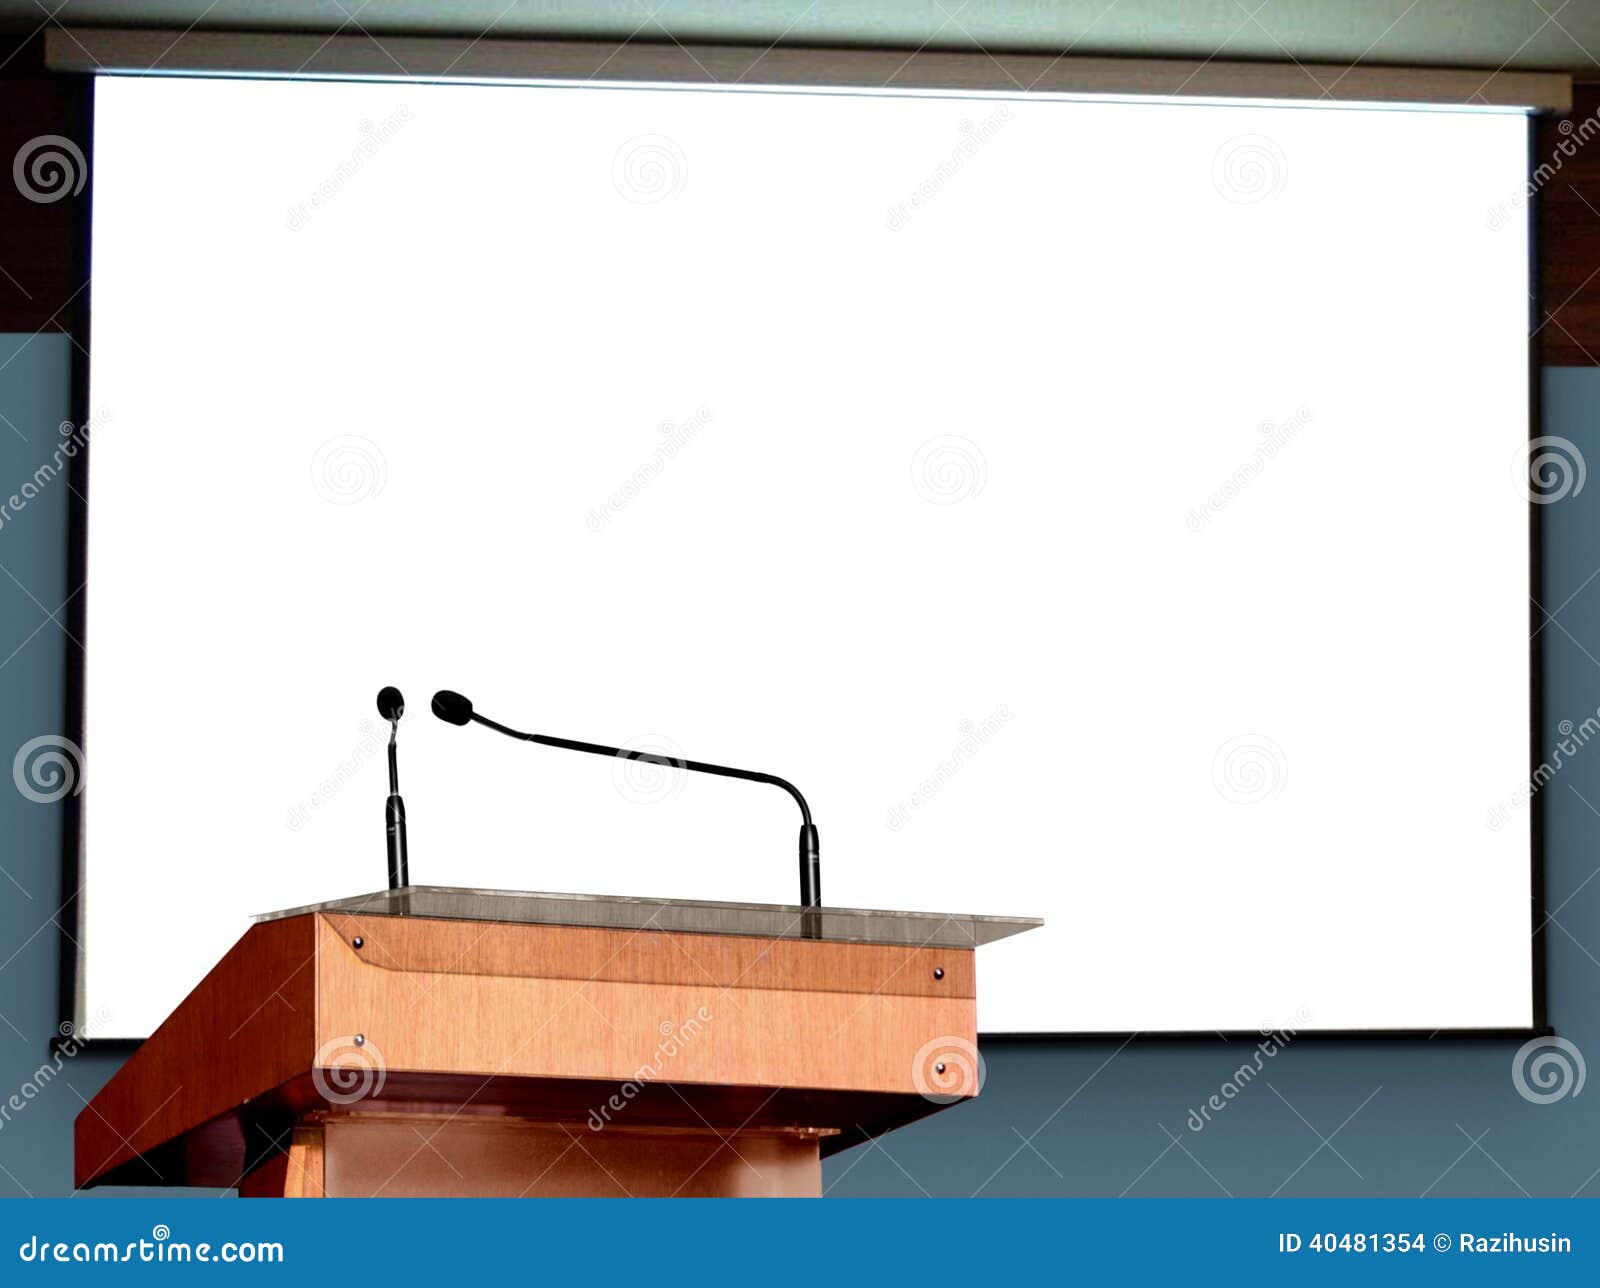 seminar podium with blank screen